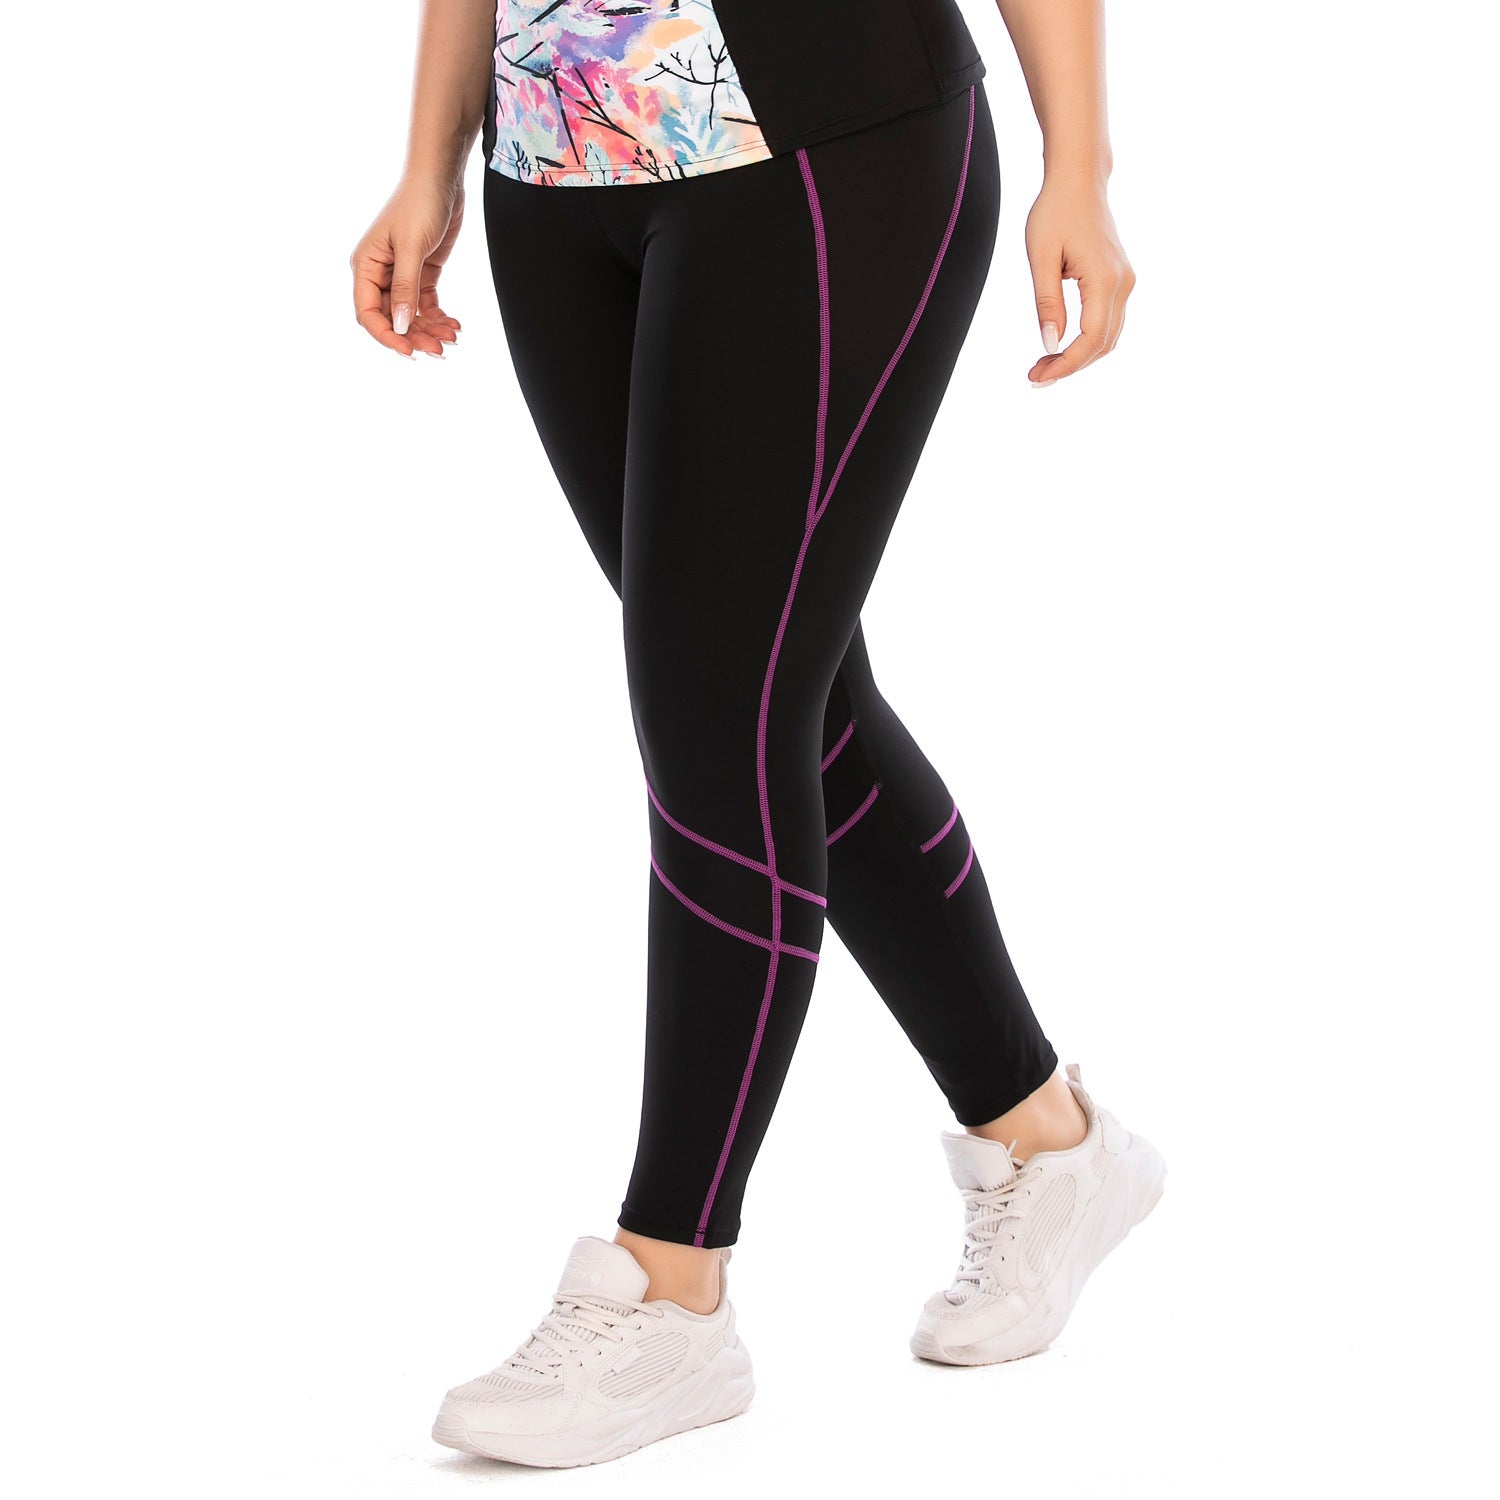 Workout Clothes Suit Plus Size Yoga Clothes Tight-fitting Pants Sports Bra